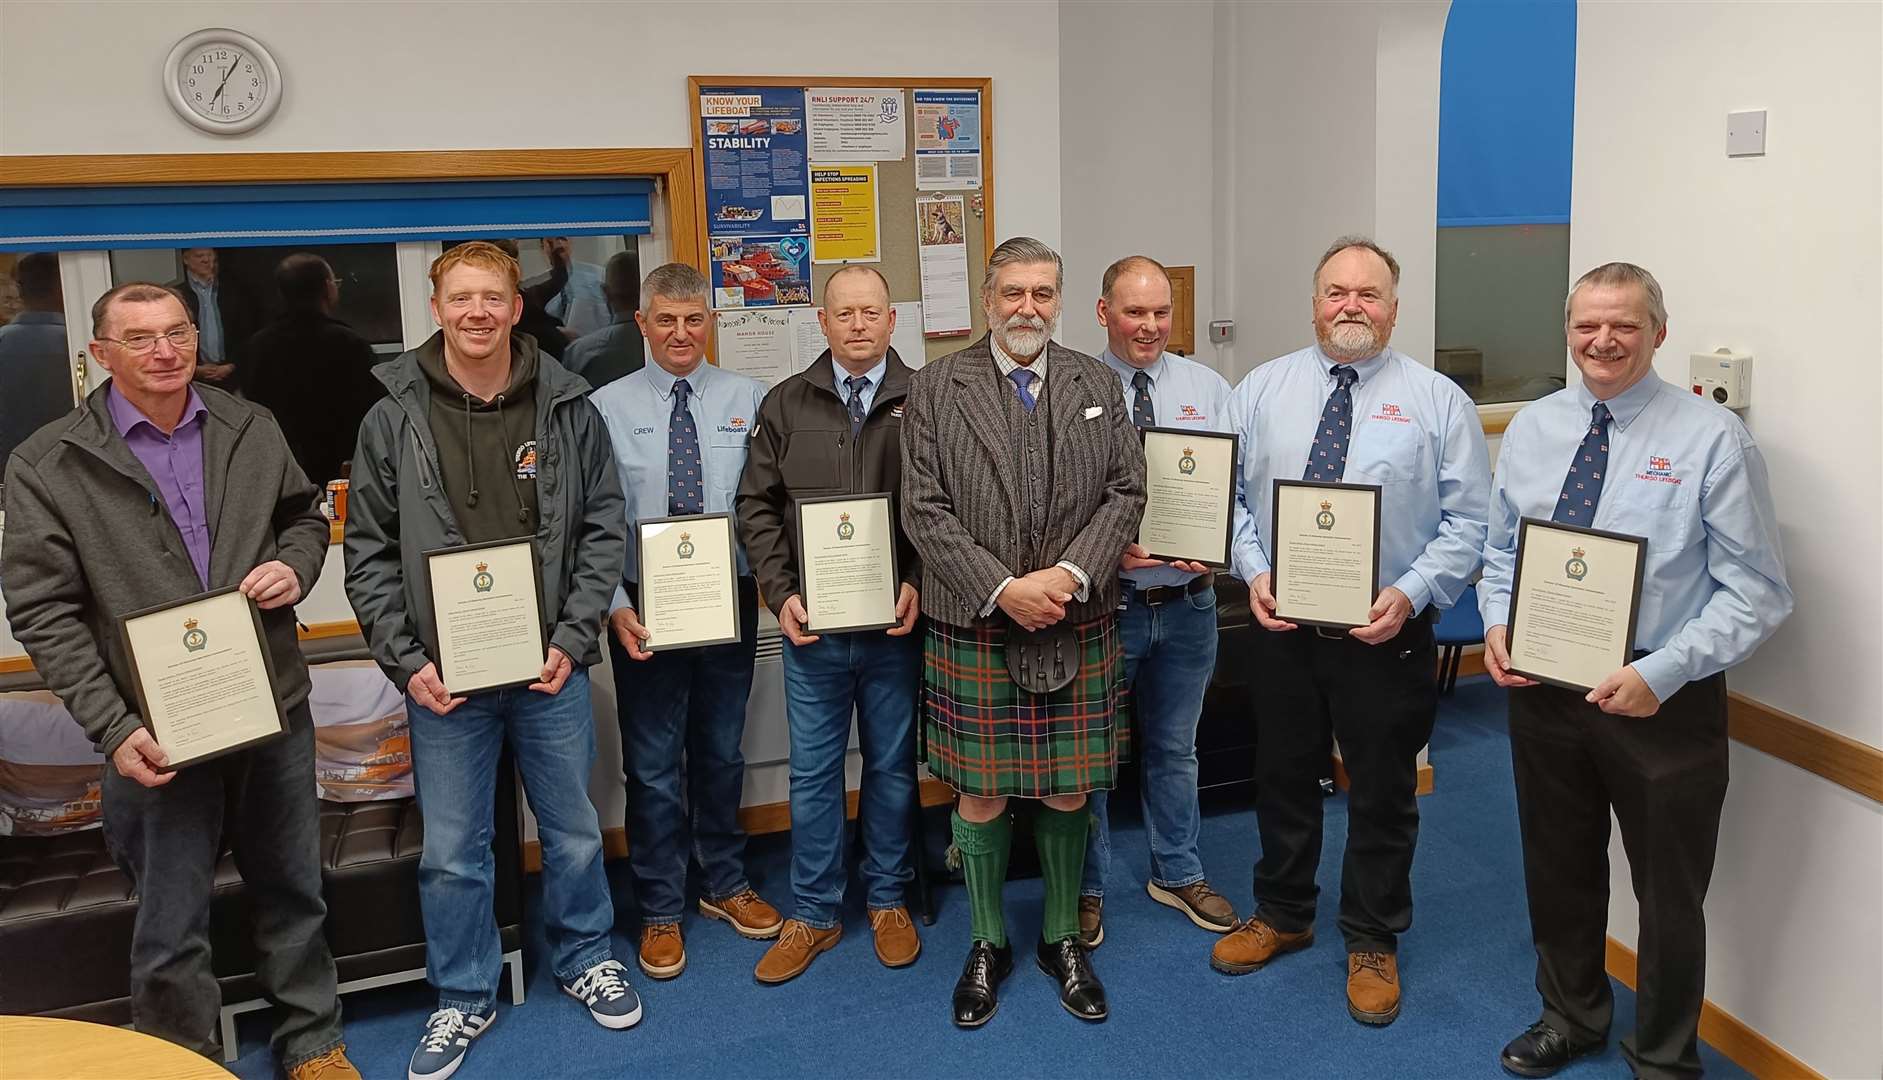 From left: Dougie Munro, Michael Munro, Gordon Gray, Kevin Davidson, Lord Thurso, James Brims, Gordon Munro and Andy Pearson.